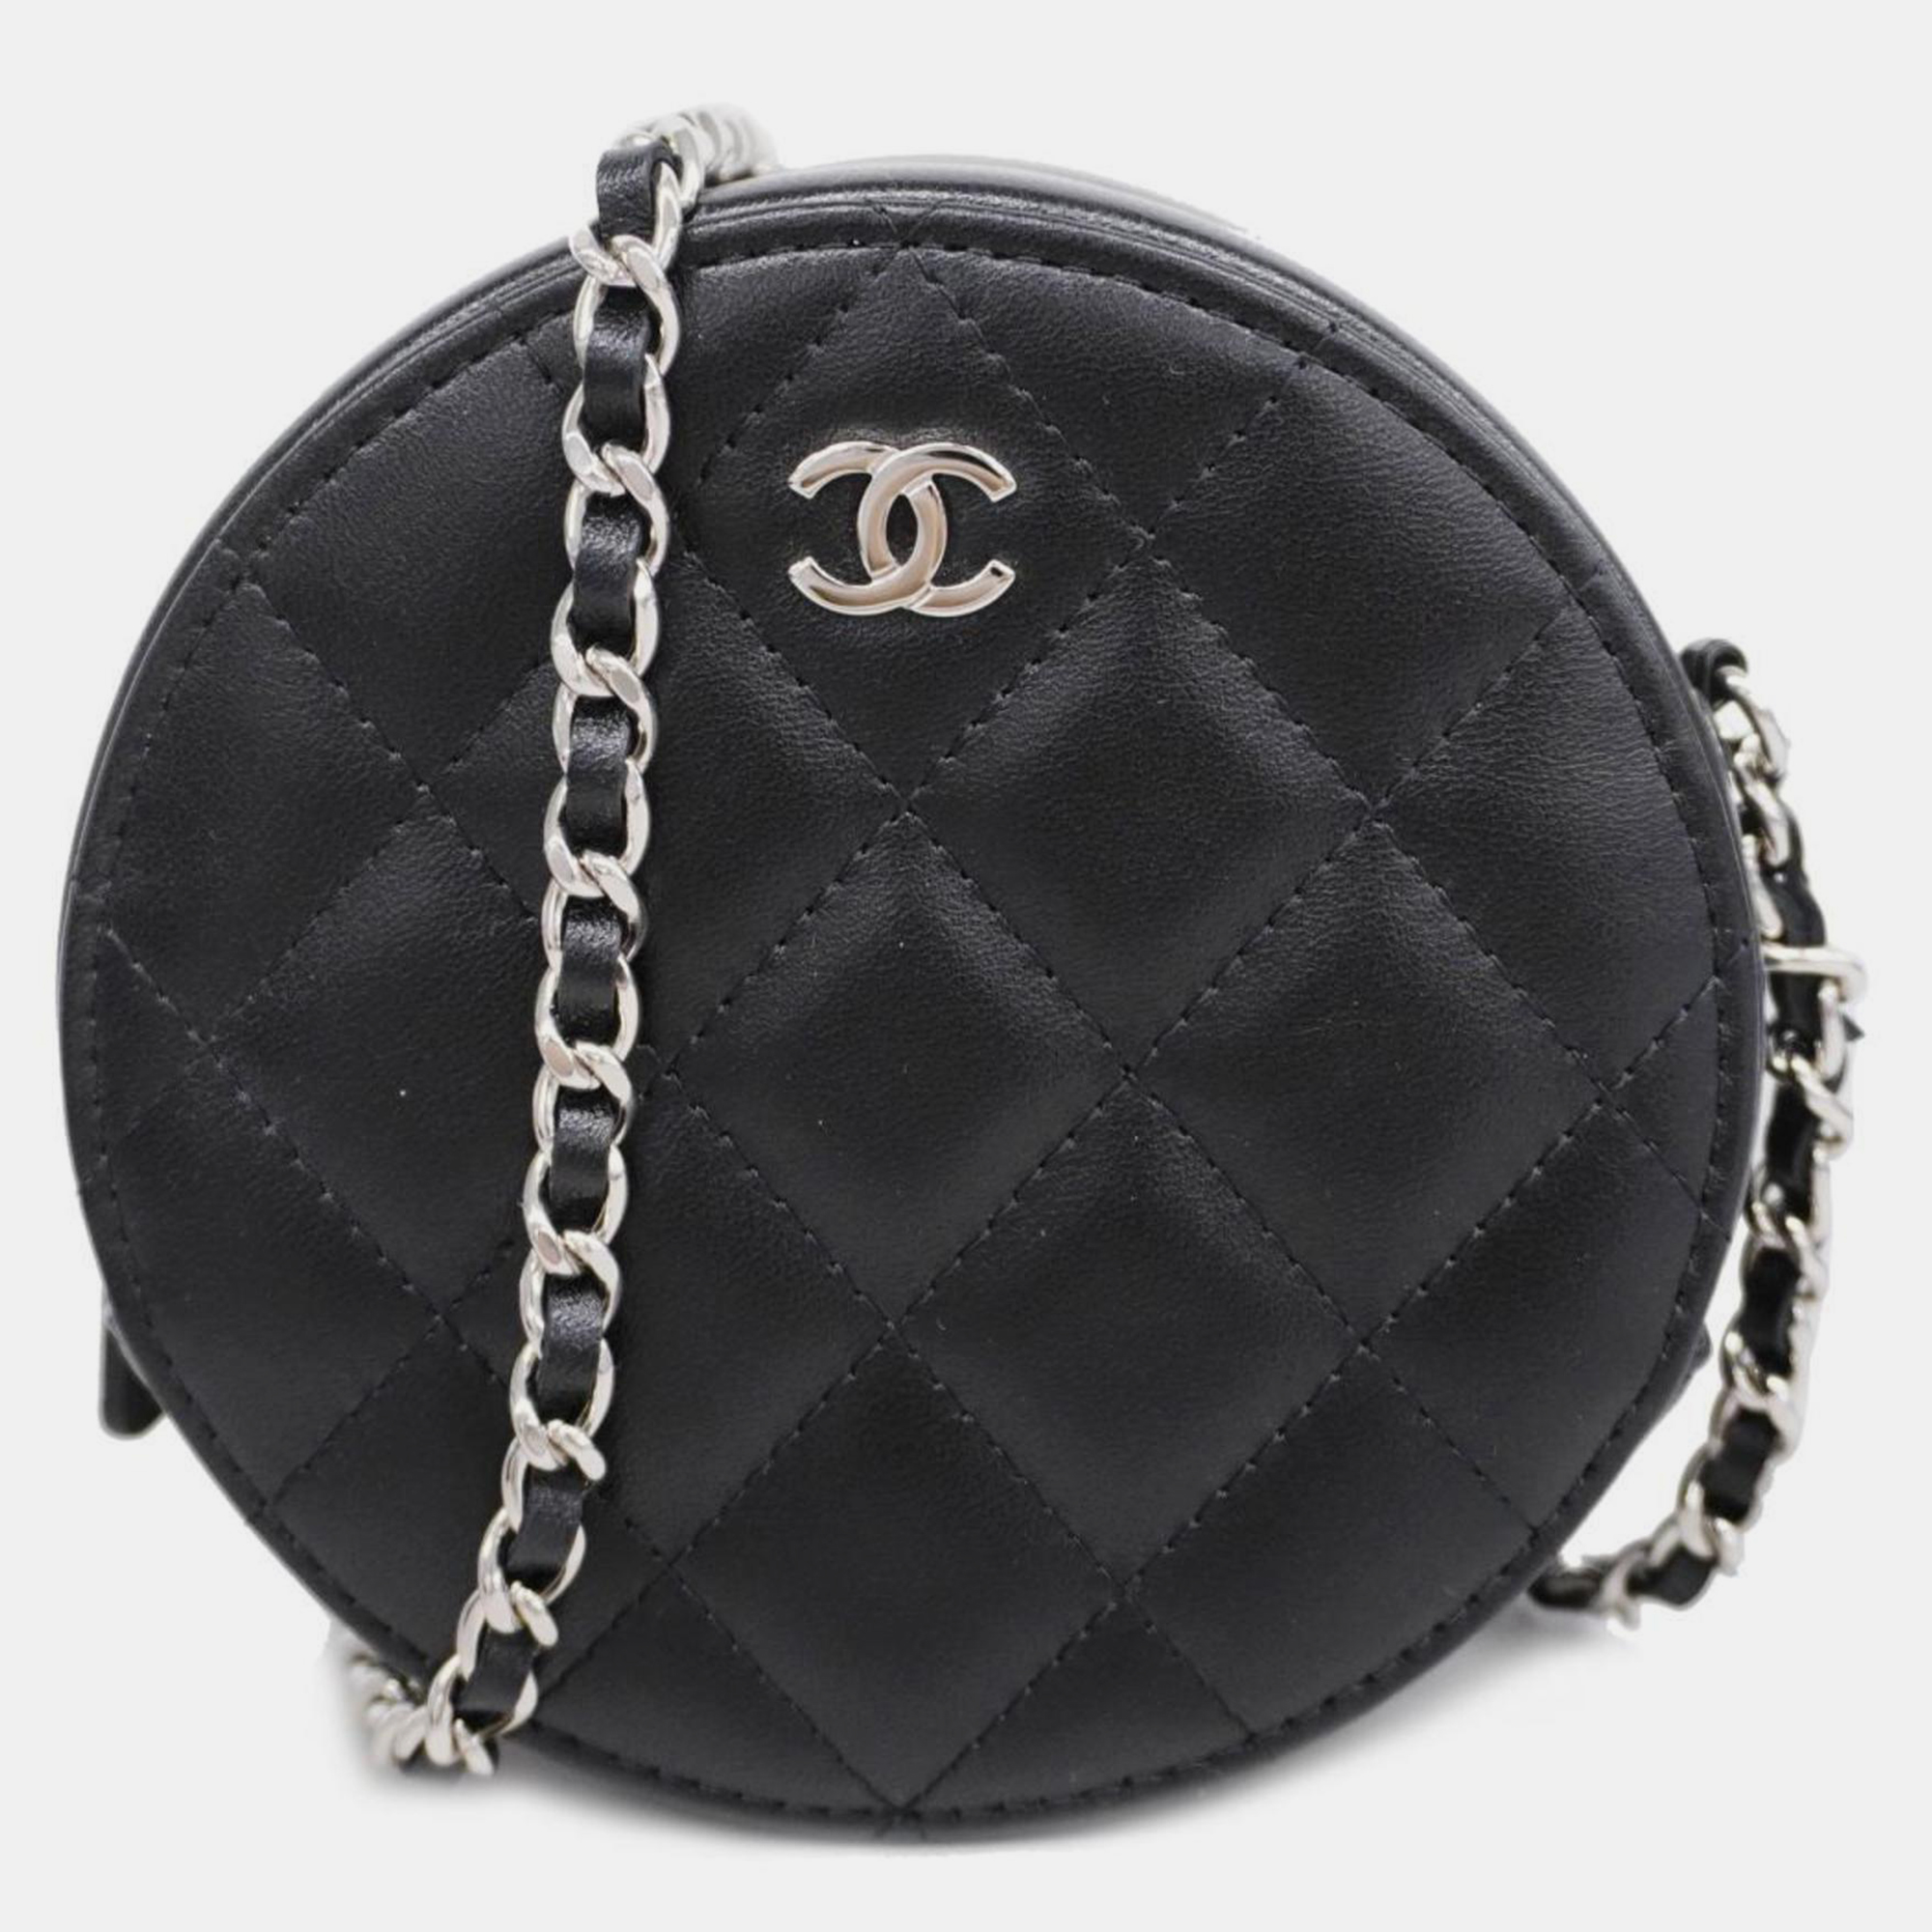 Chanel black leather round cc clutch bag